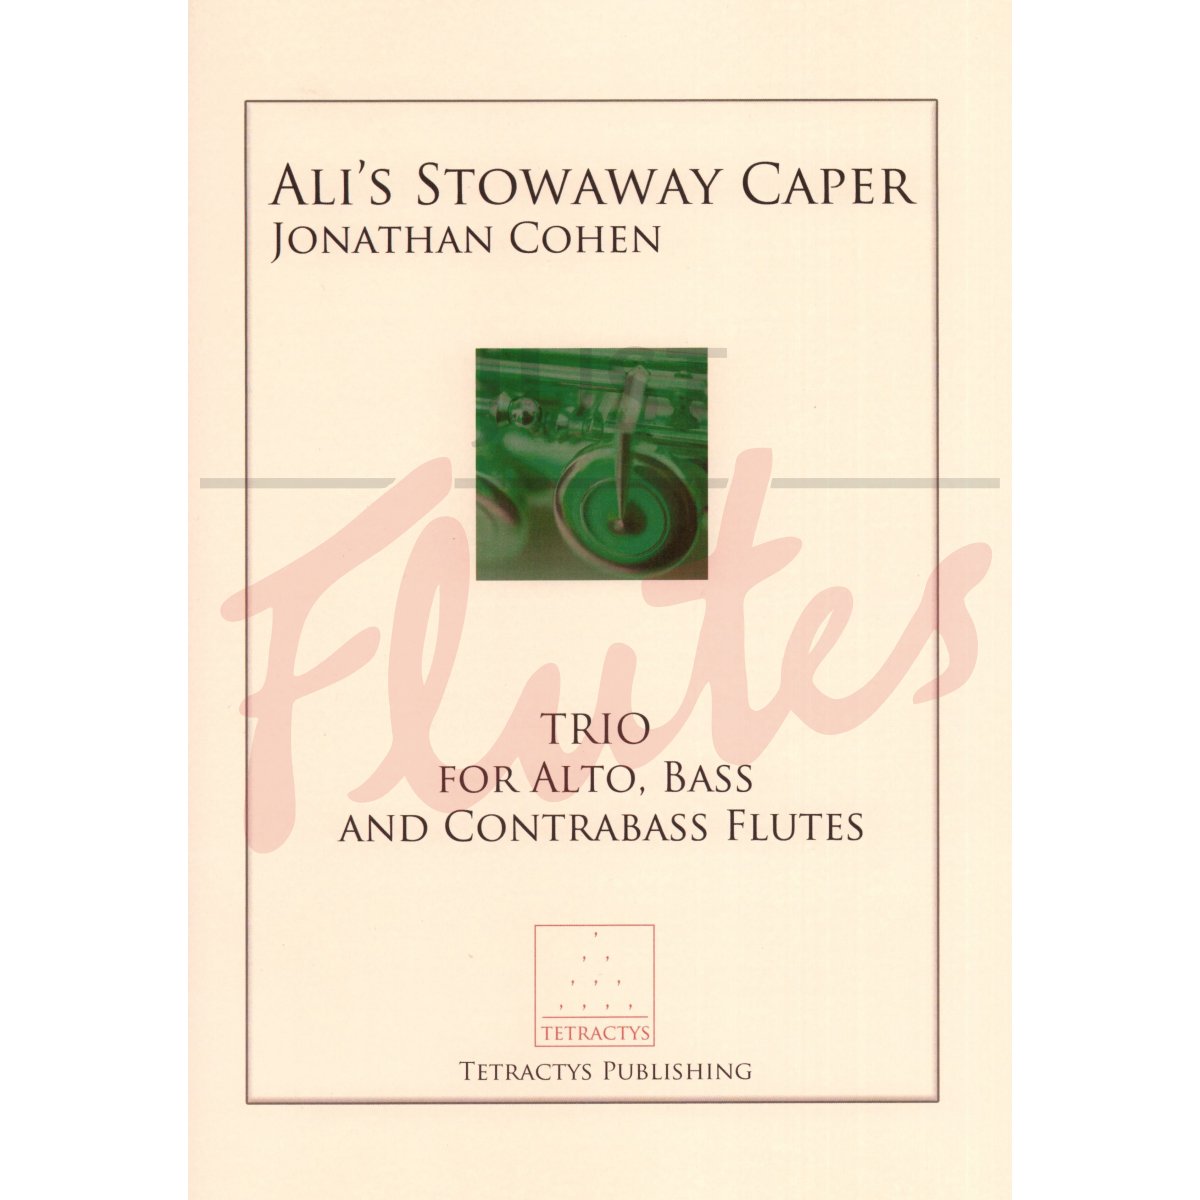 Ali's Stowaway Caper: Trio for Alto, Bass and Contrabass Flutes